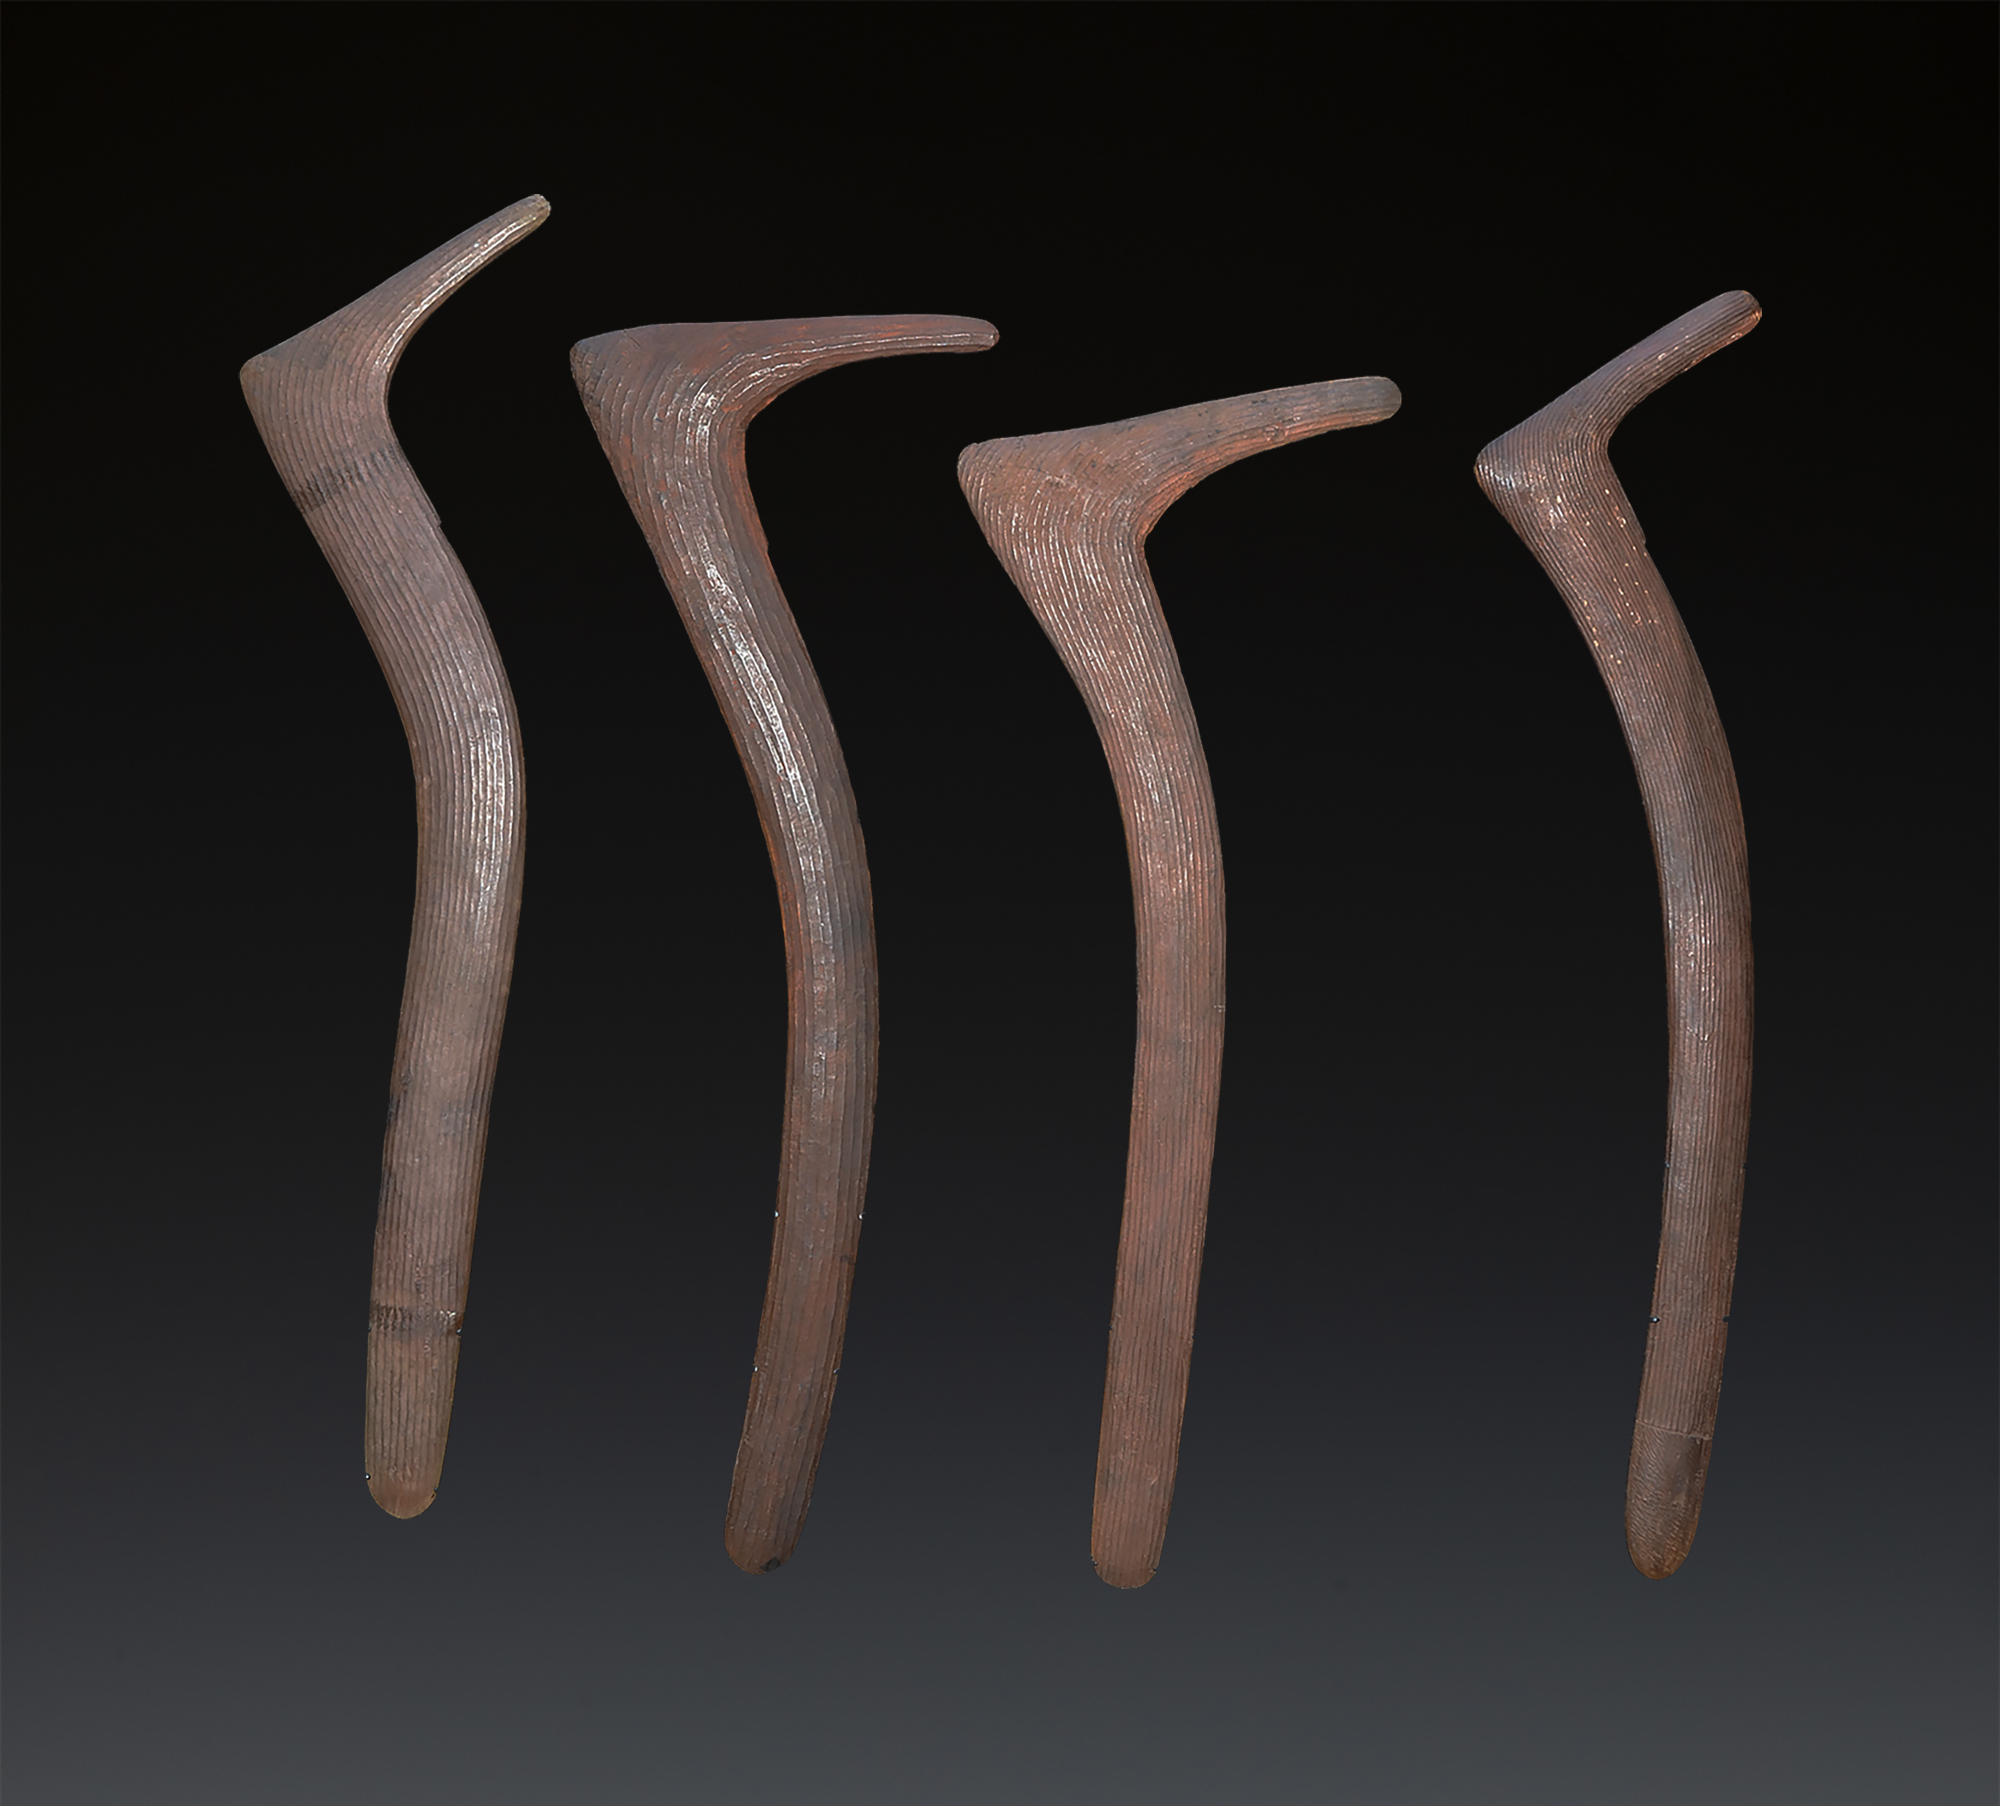 Fine Old Hooked Boomerangs, Northern Territory of Australia 19th Century